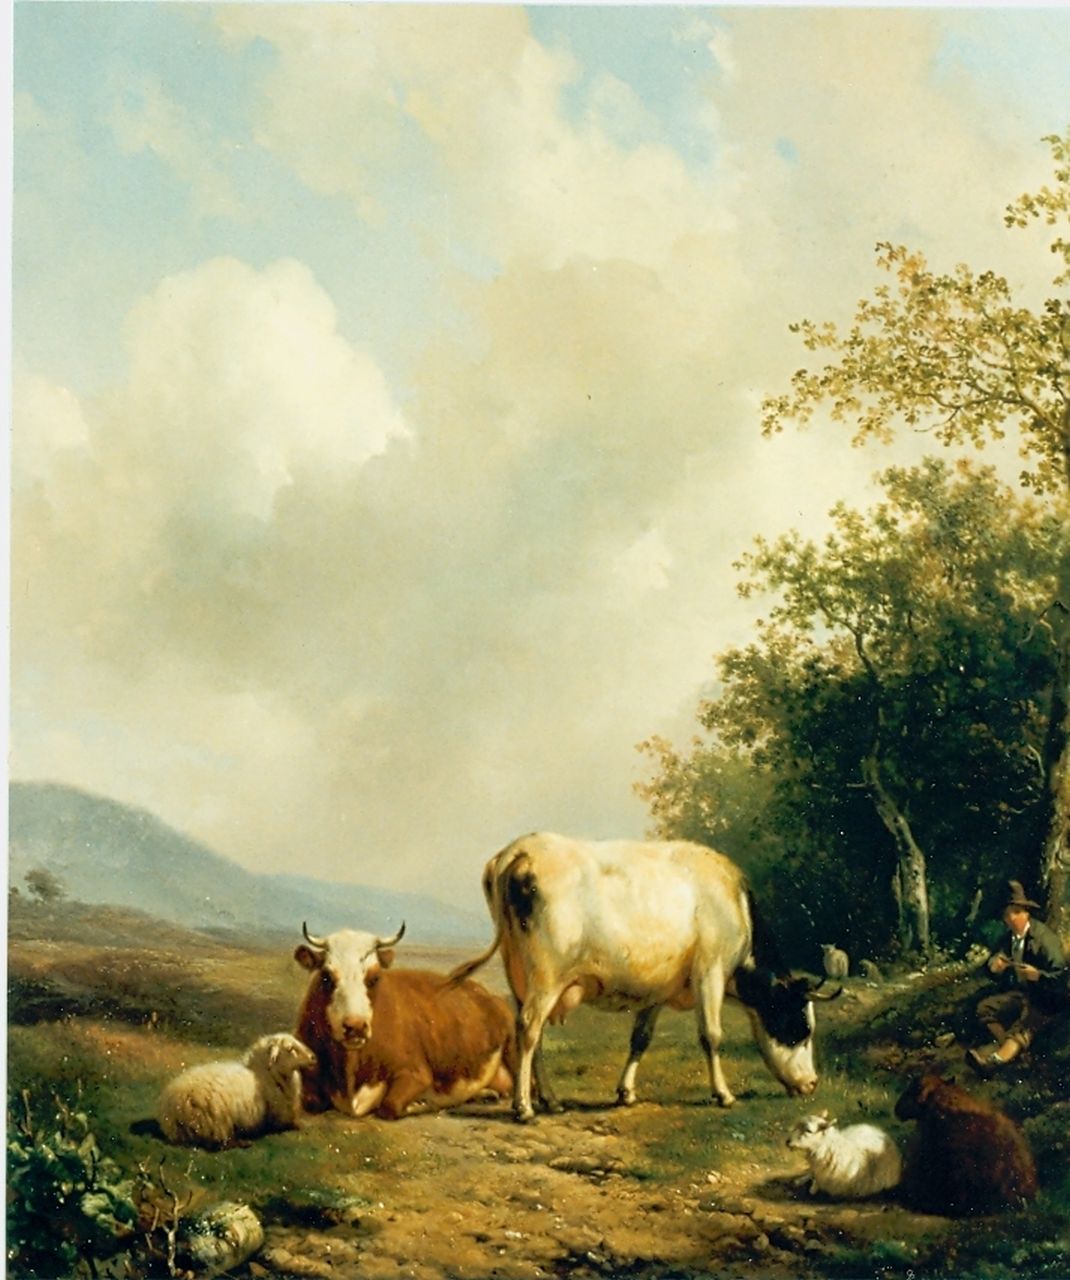 Sande Bakhuyzen H. van de | Hendrikus van de Sande Bakhuyzen, A shepherd and cattle in a landscape, oil on panel 52.0 x 46.0 cm, signed l.l.